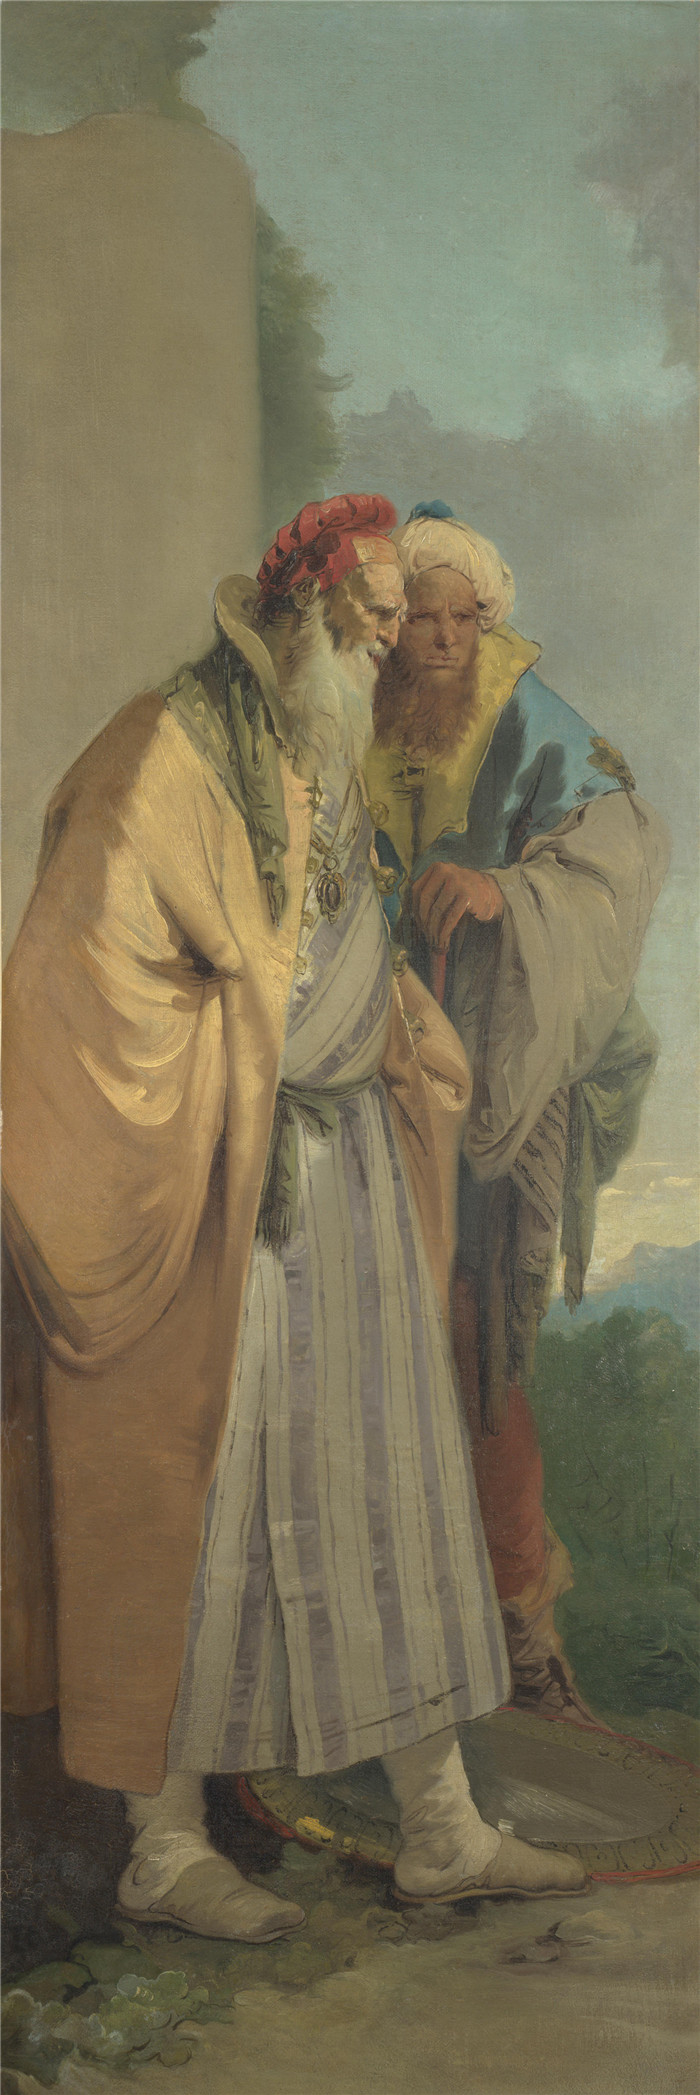 乔瓦尼·巴蒂斯塔·提埃波罗,Giovanni Battista Tiepolo - Two Men in Oriental Costume高清作品